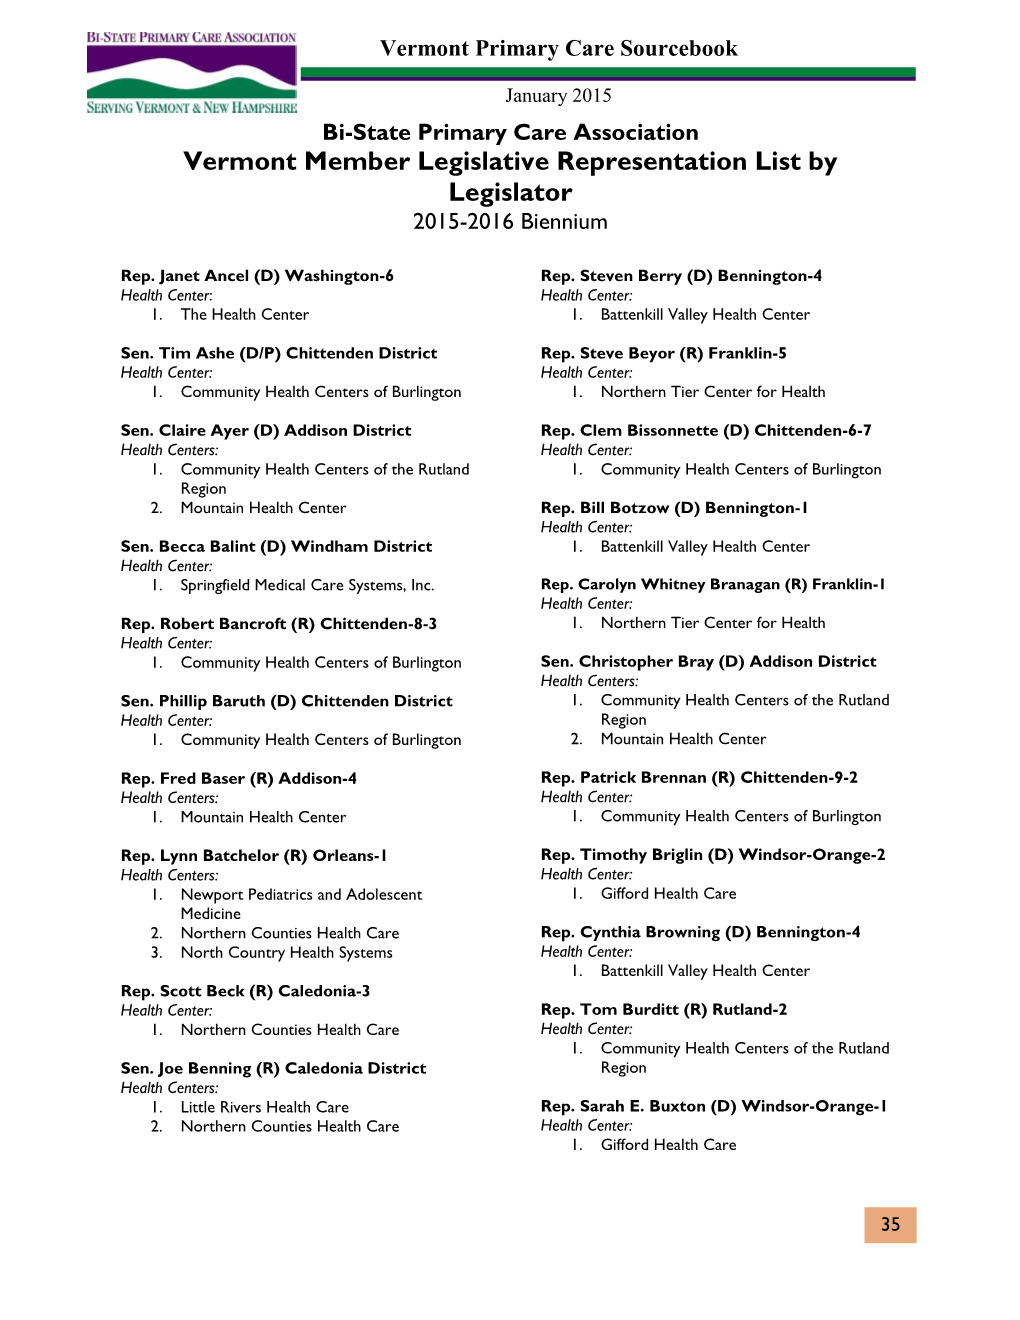 Vermont Member Legislative Representation List by Legislator 2015-2016 Biennium